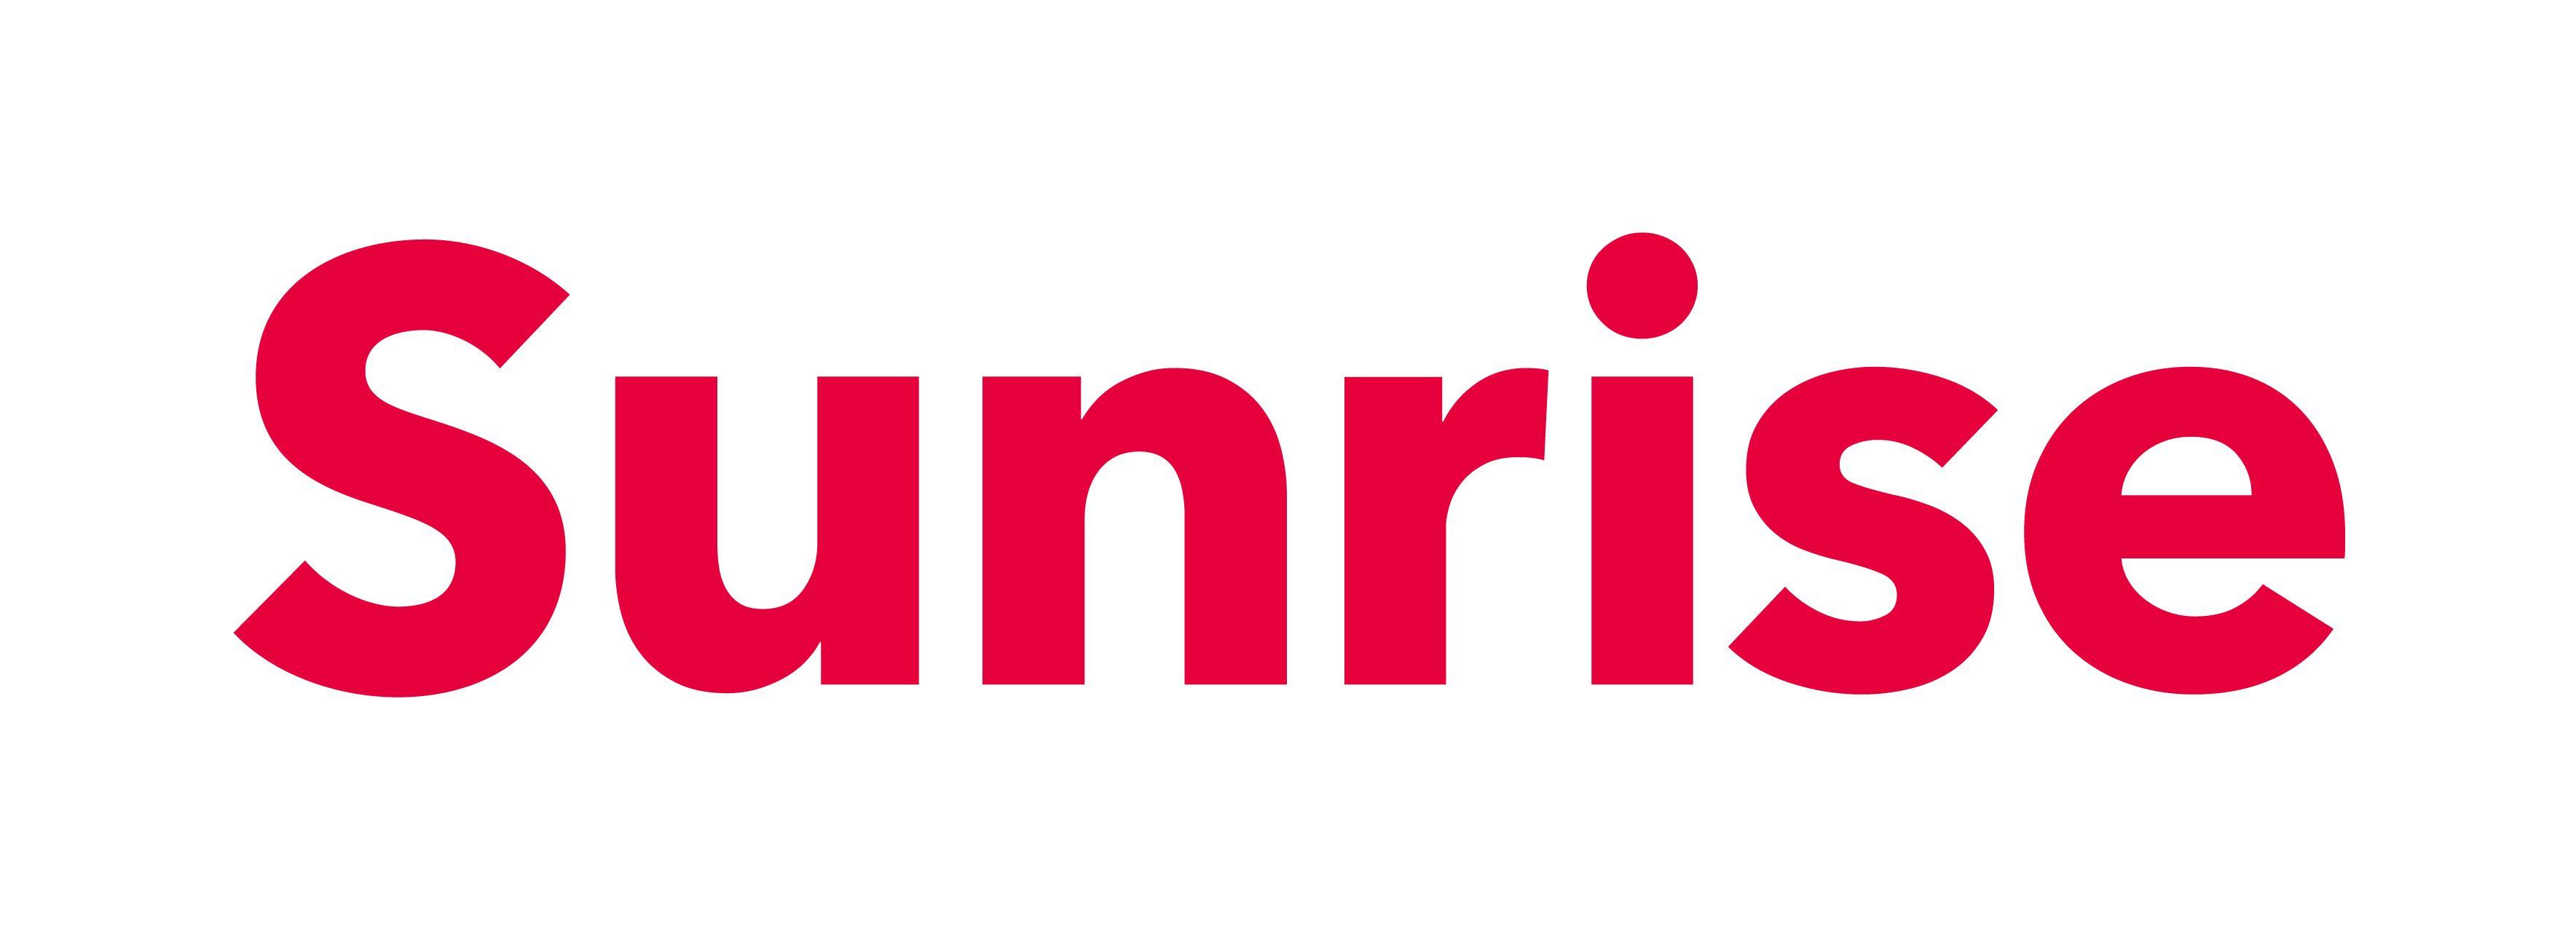 Sunrise Logo - Sunrise Logos